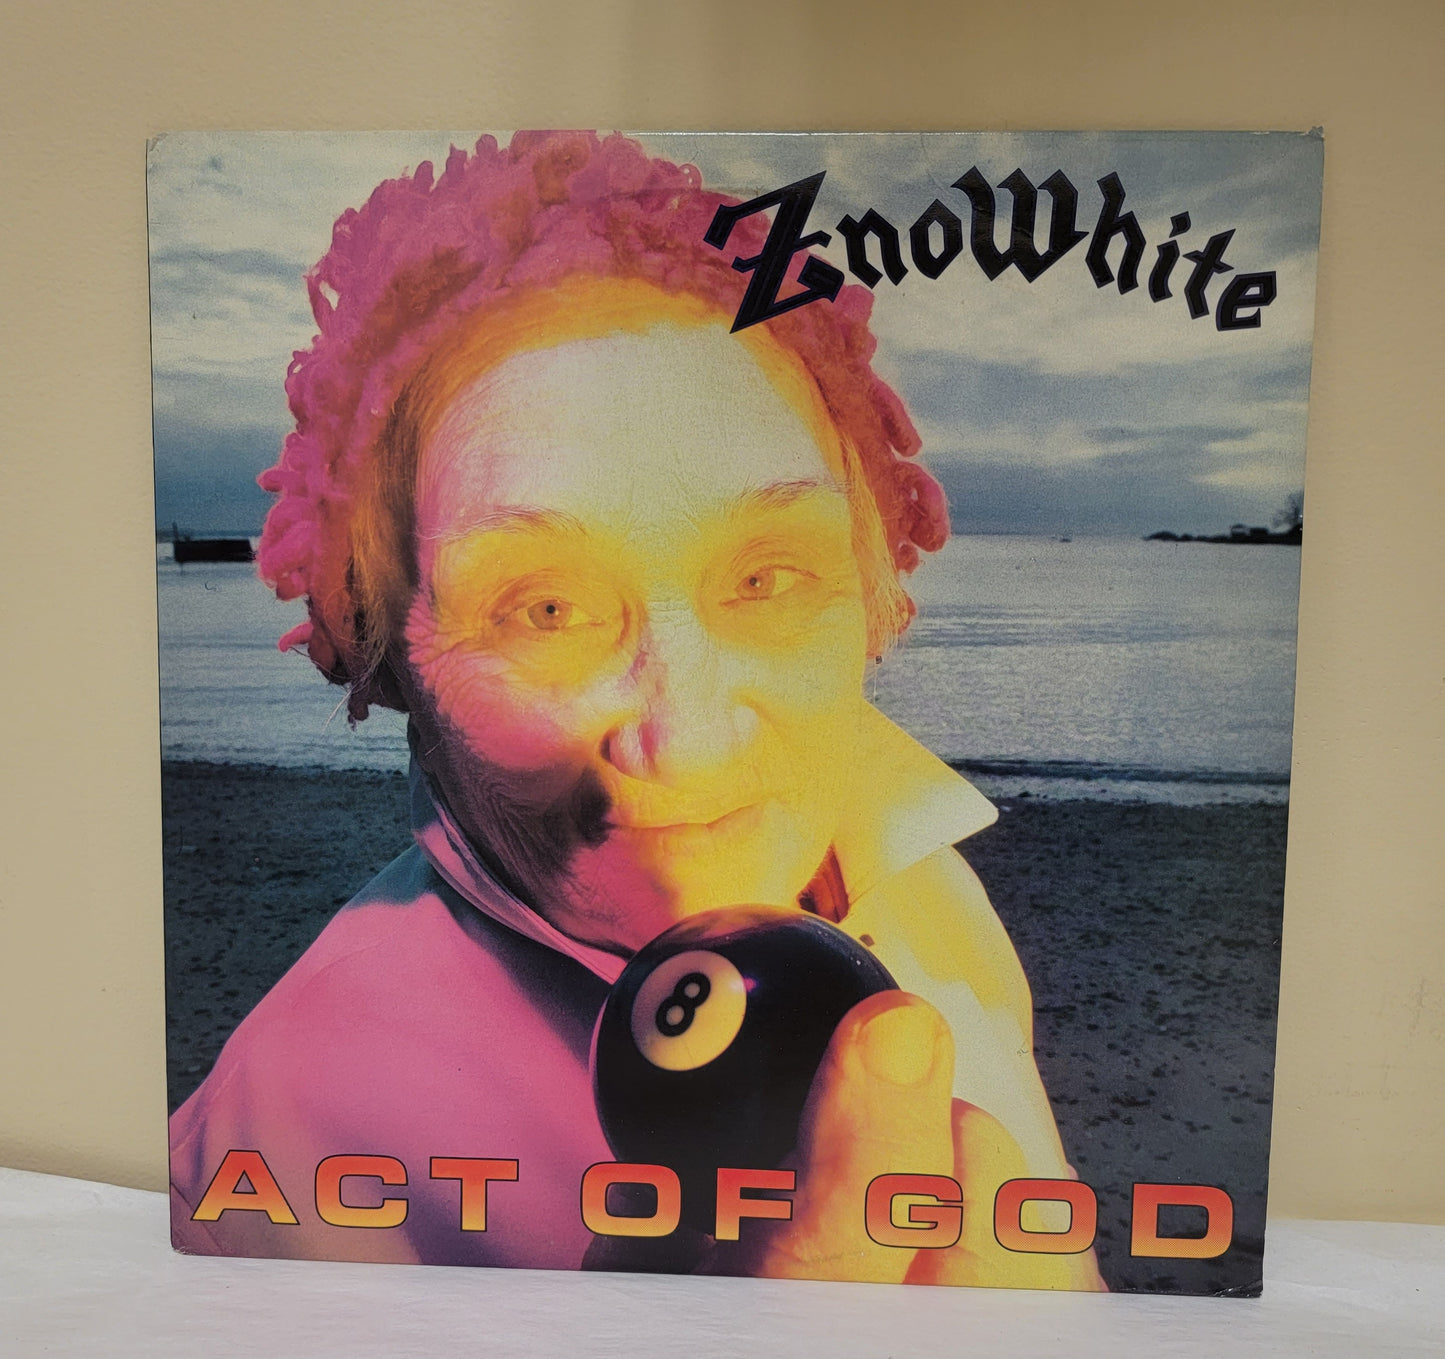 ZnoWhite "Act of God" 1988 Thrash Metal Record Album